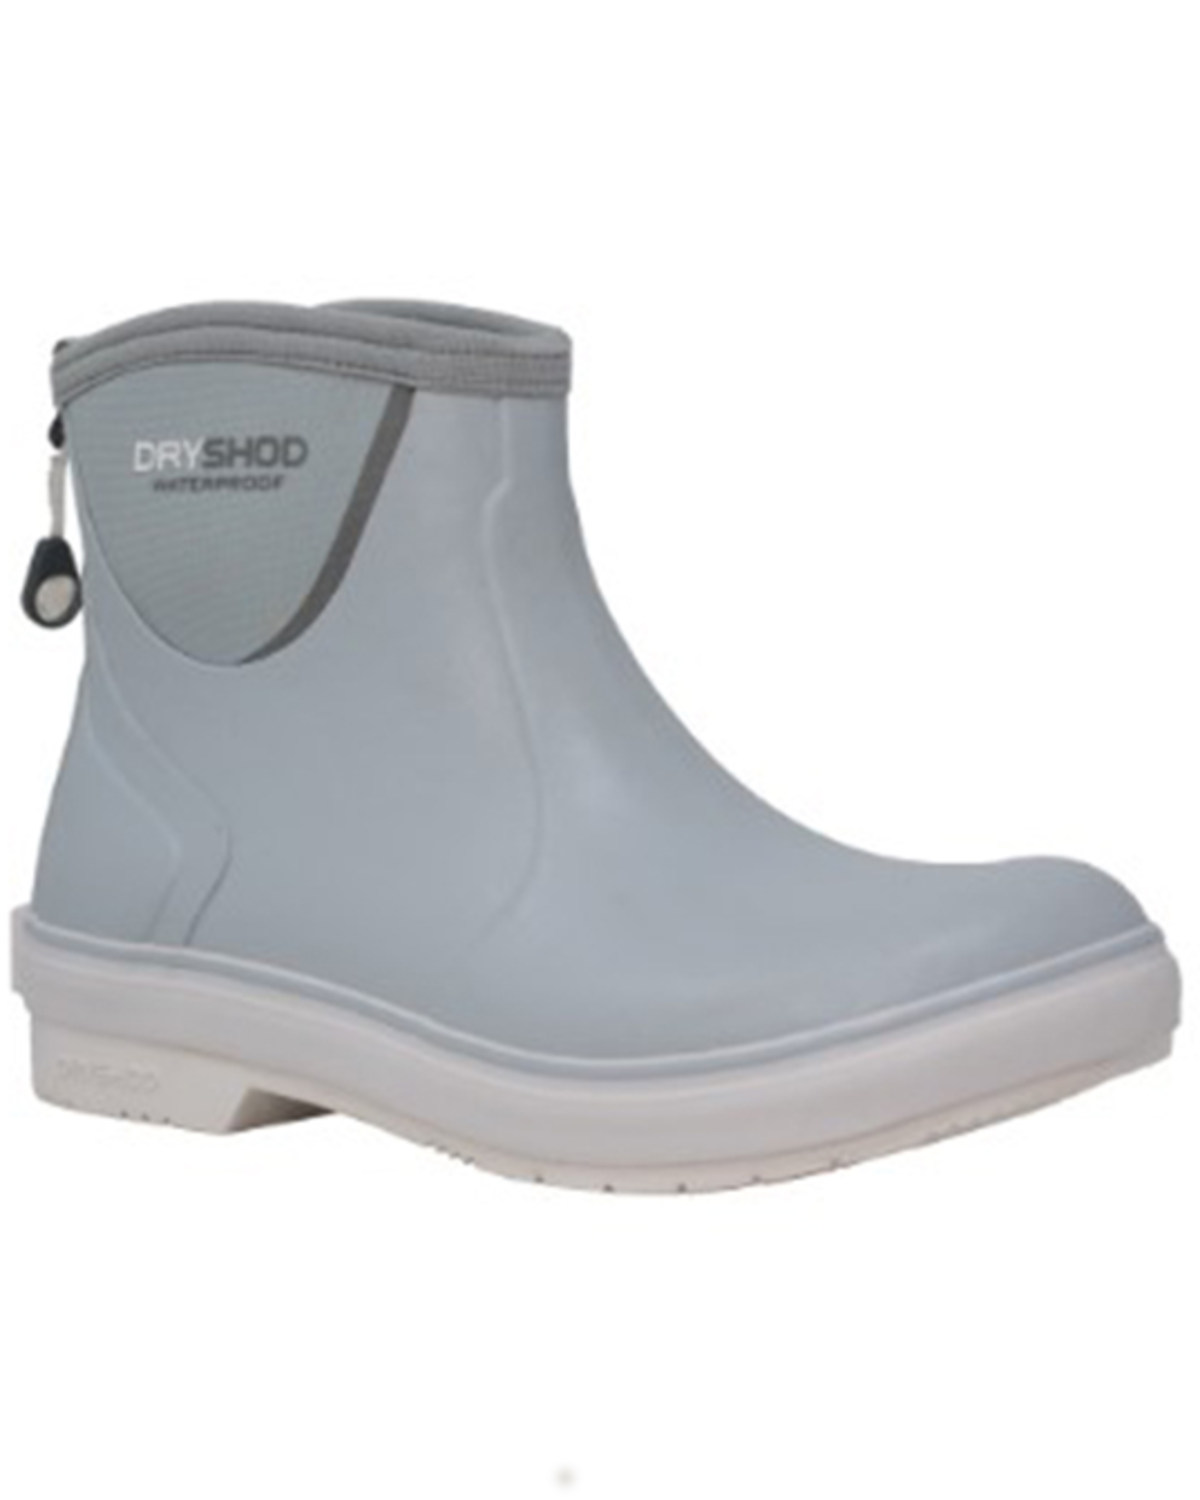 Dryshod Women's Slipnot Ankle Waterproof Work Boots - Round Toe